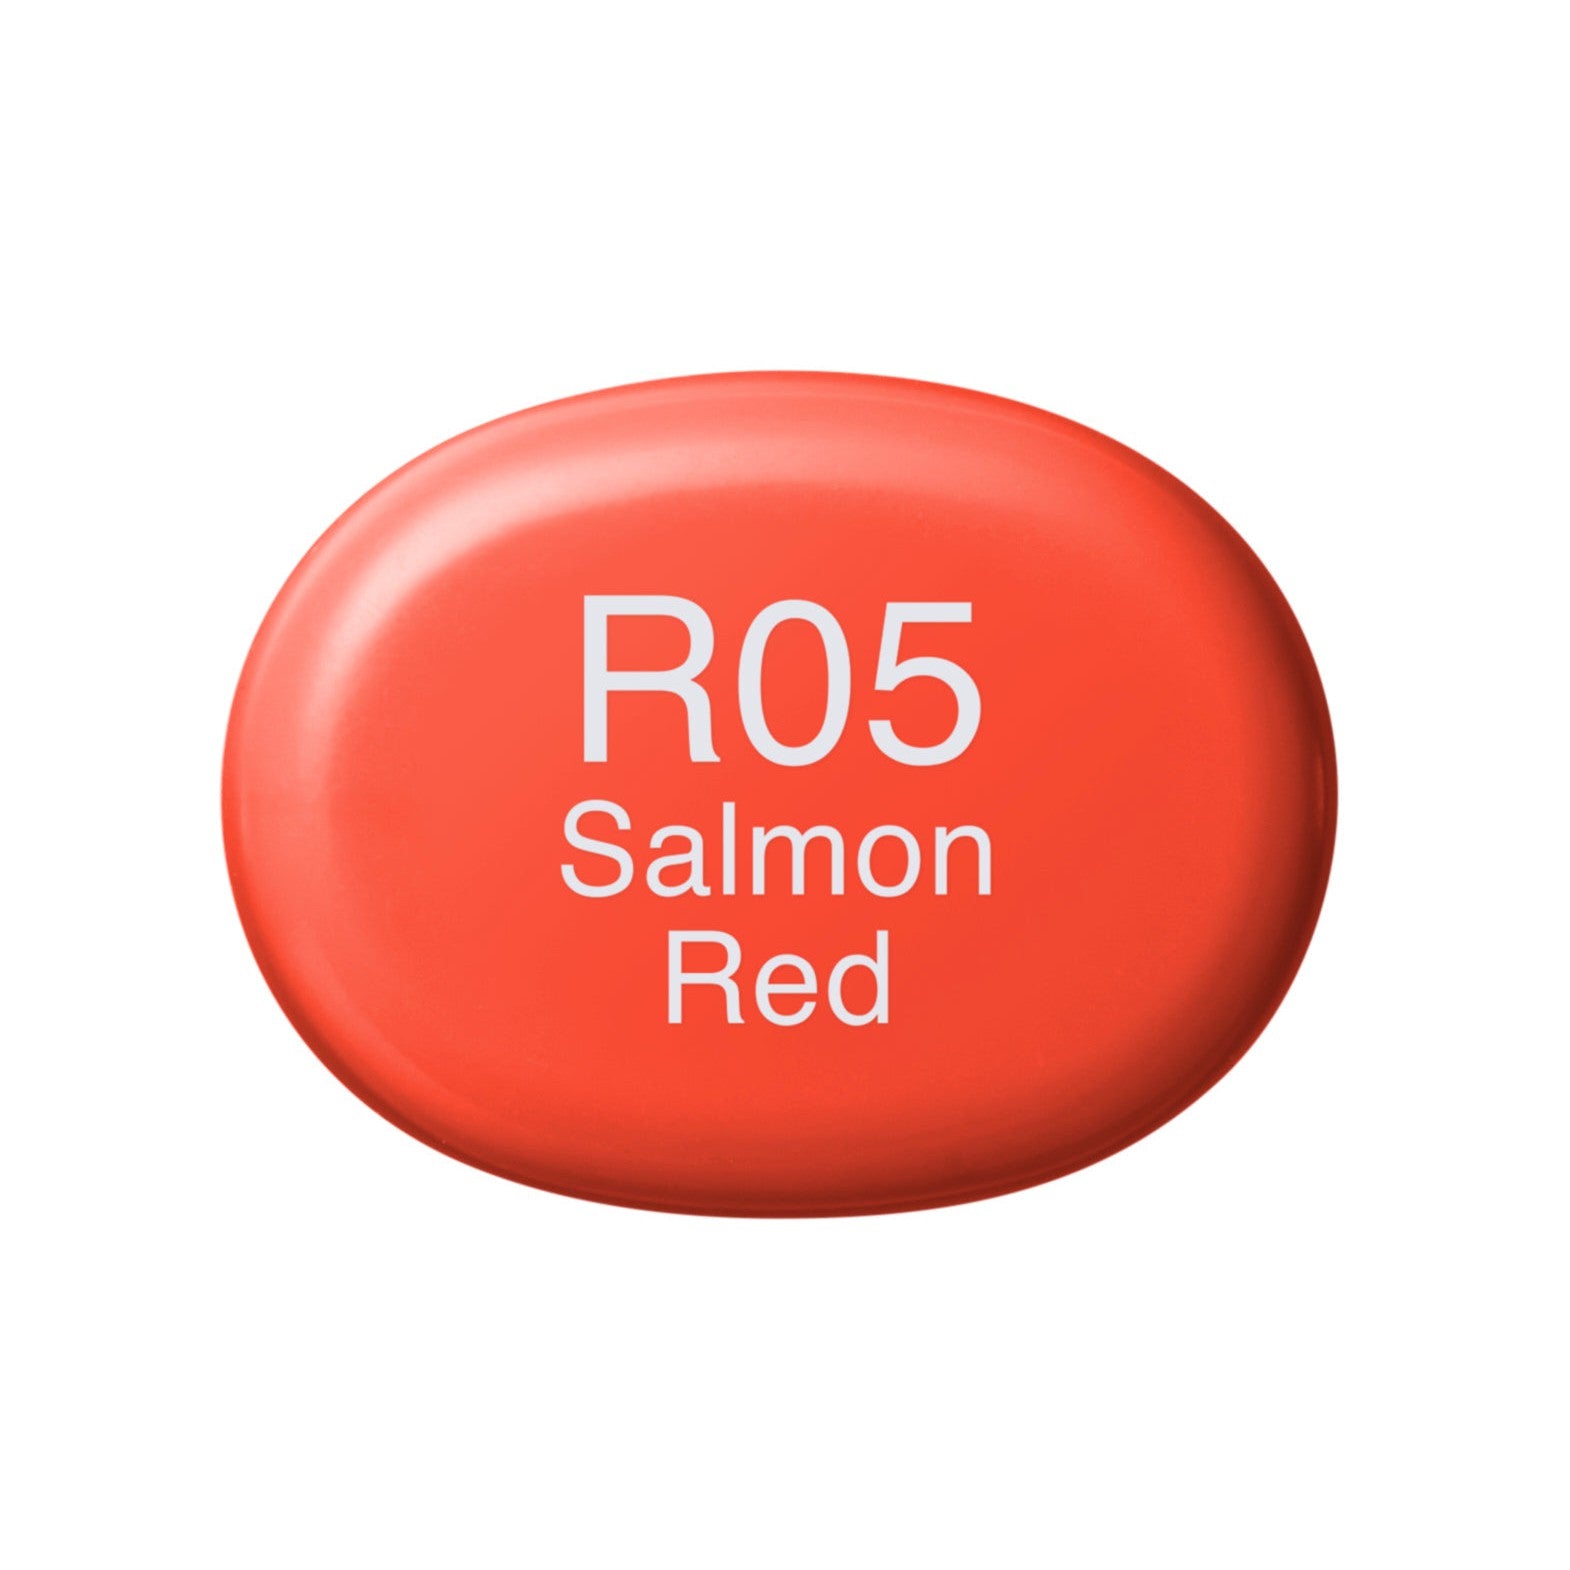 Copic - Sketch Marker - Salmon Red - R05-ScrapbookPal